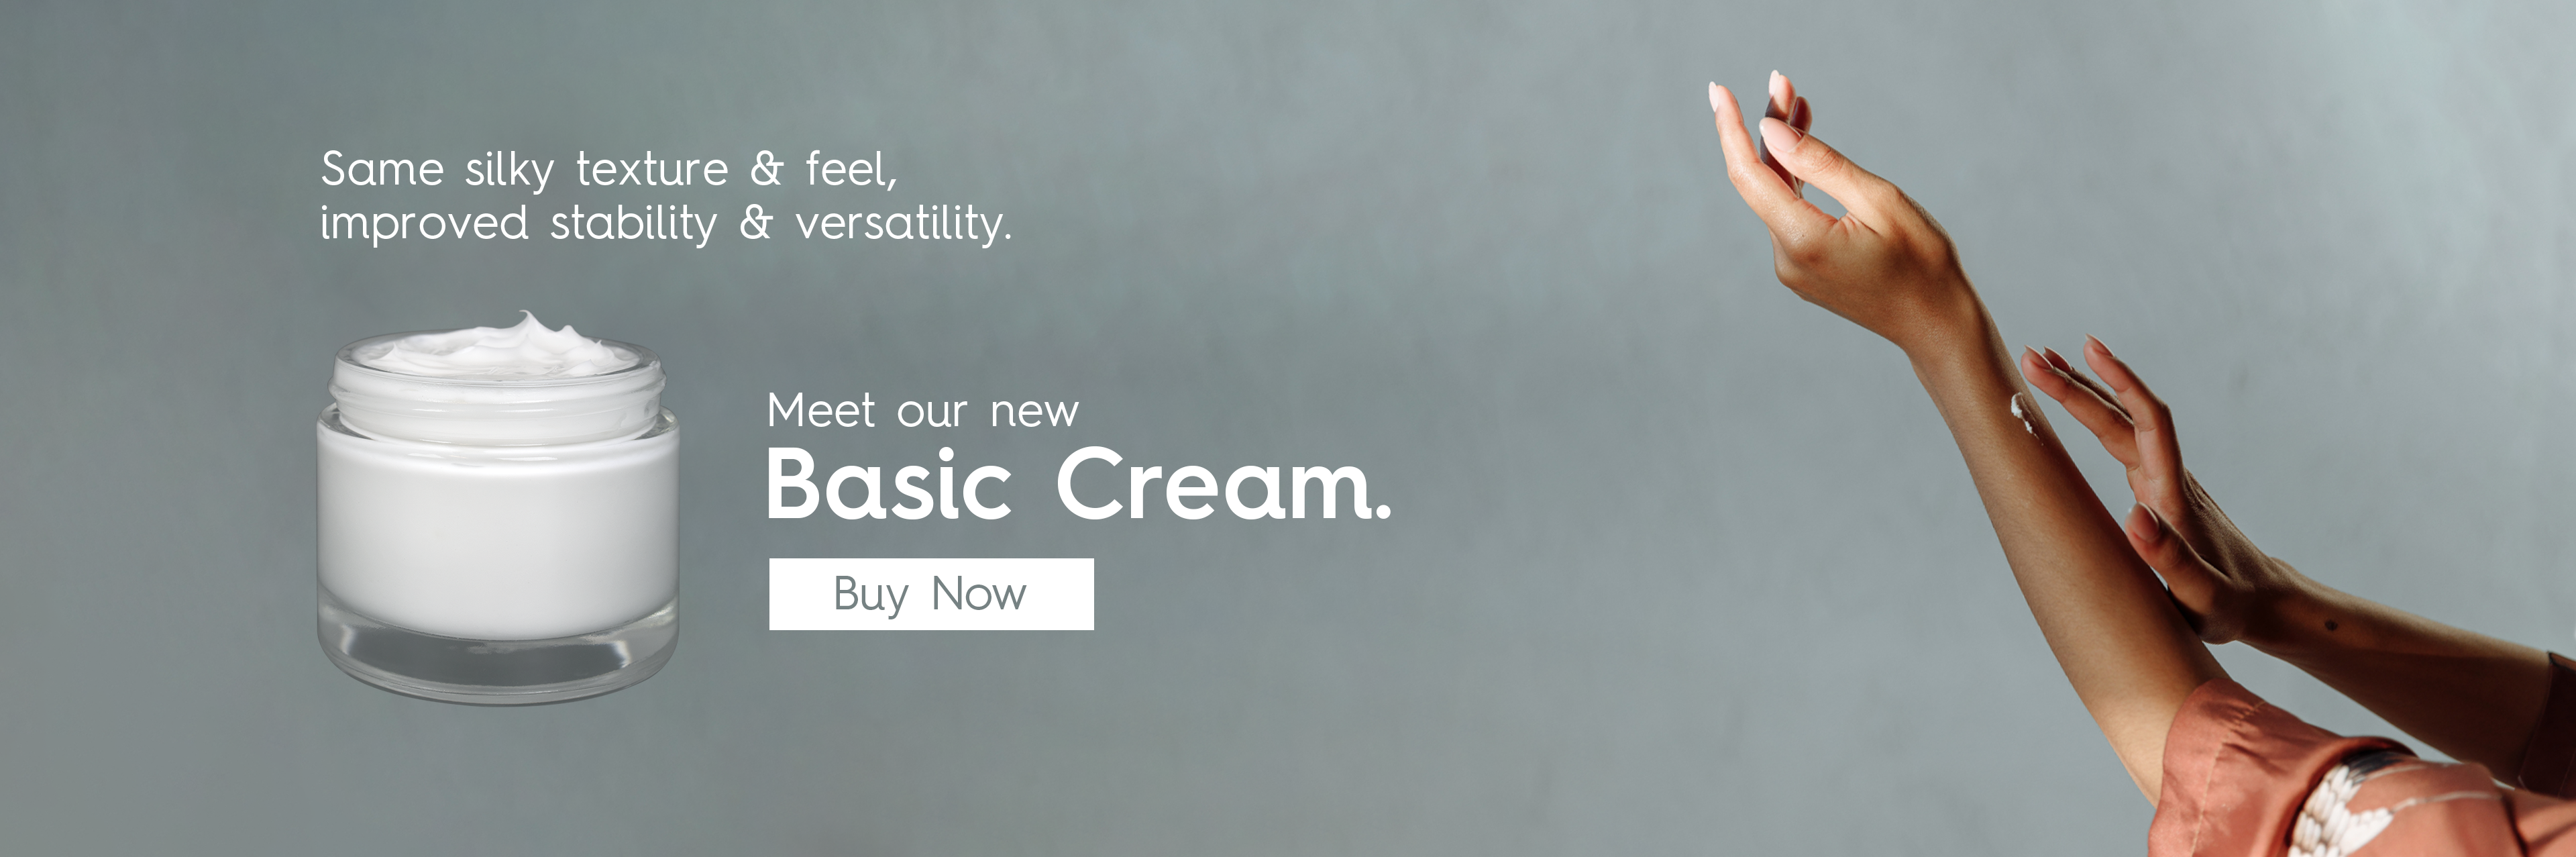 Meet our new basic cream